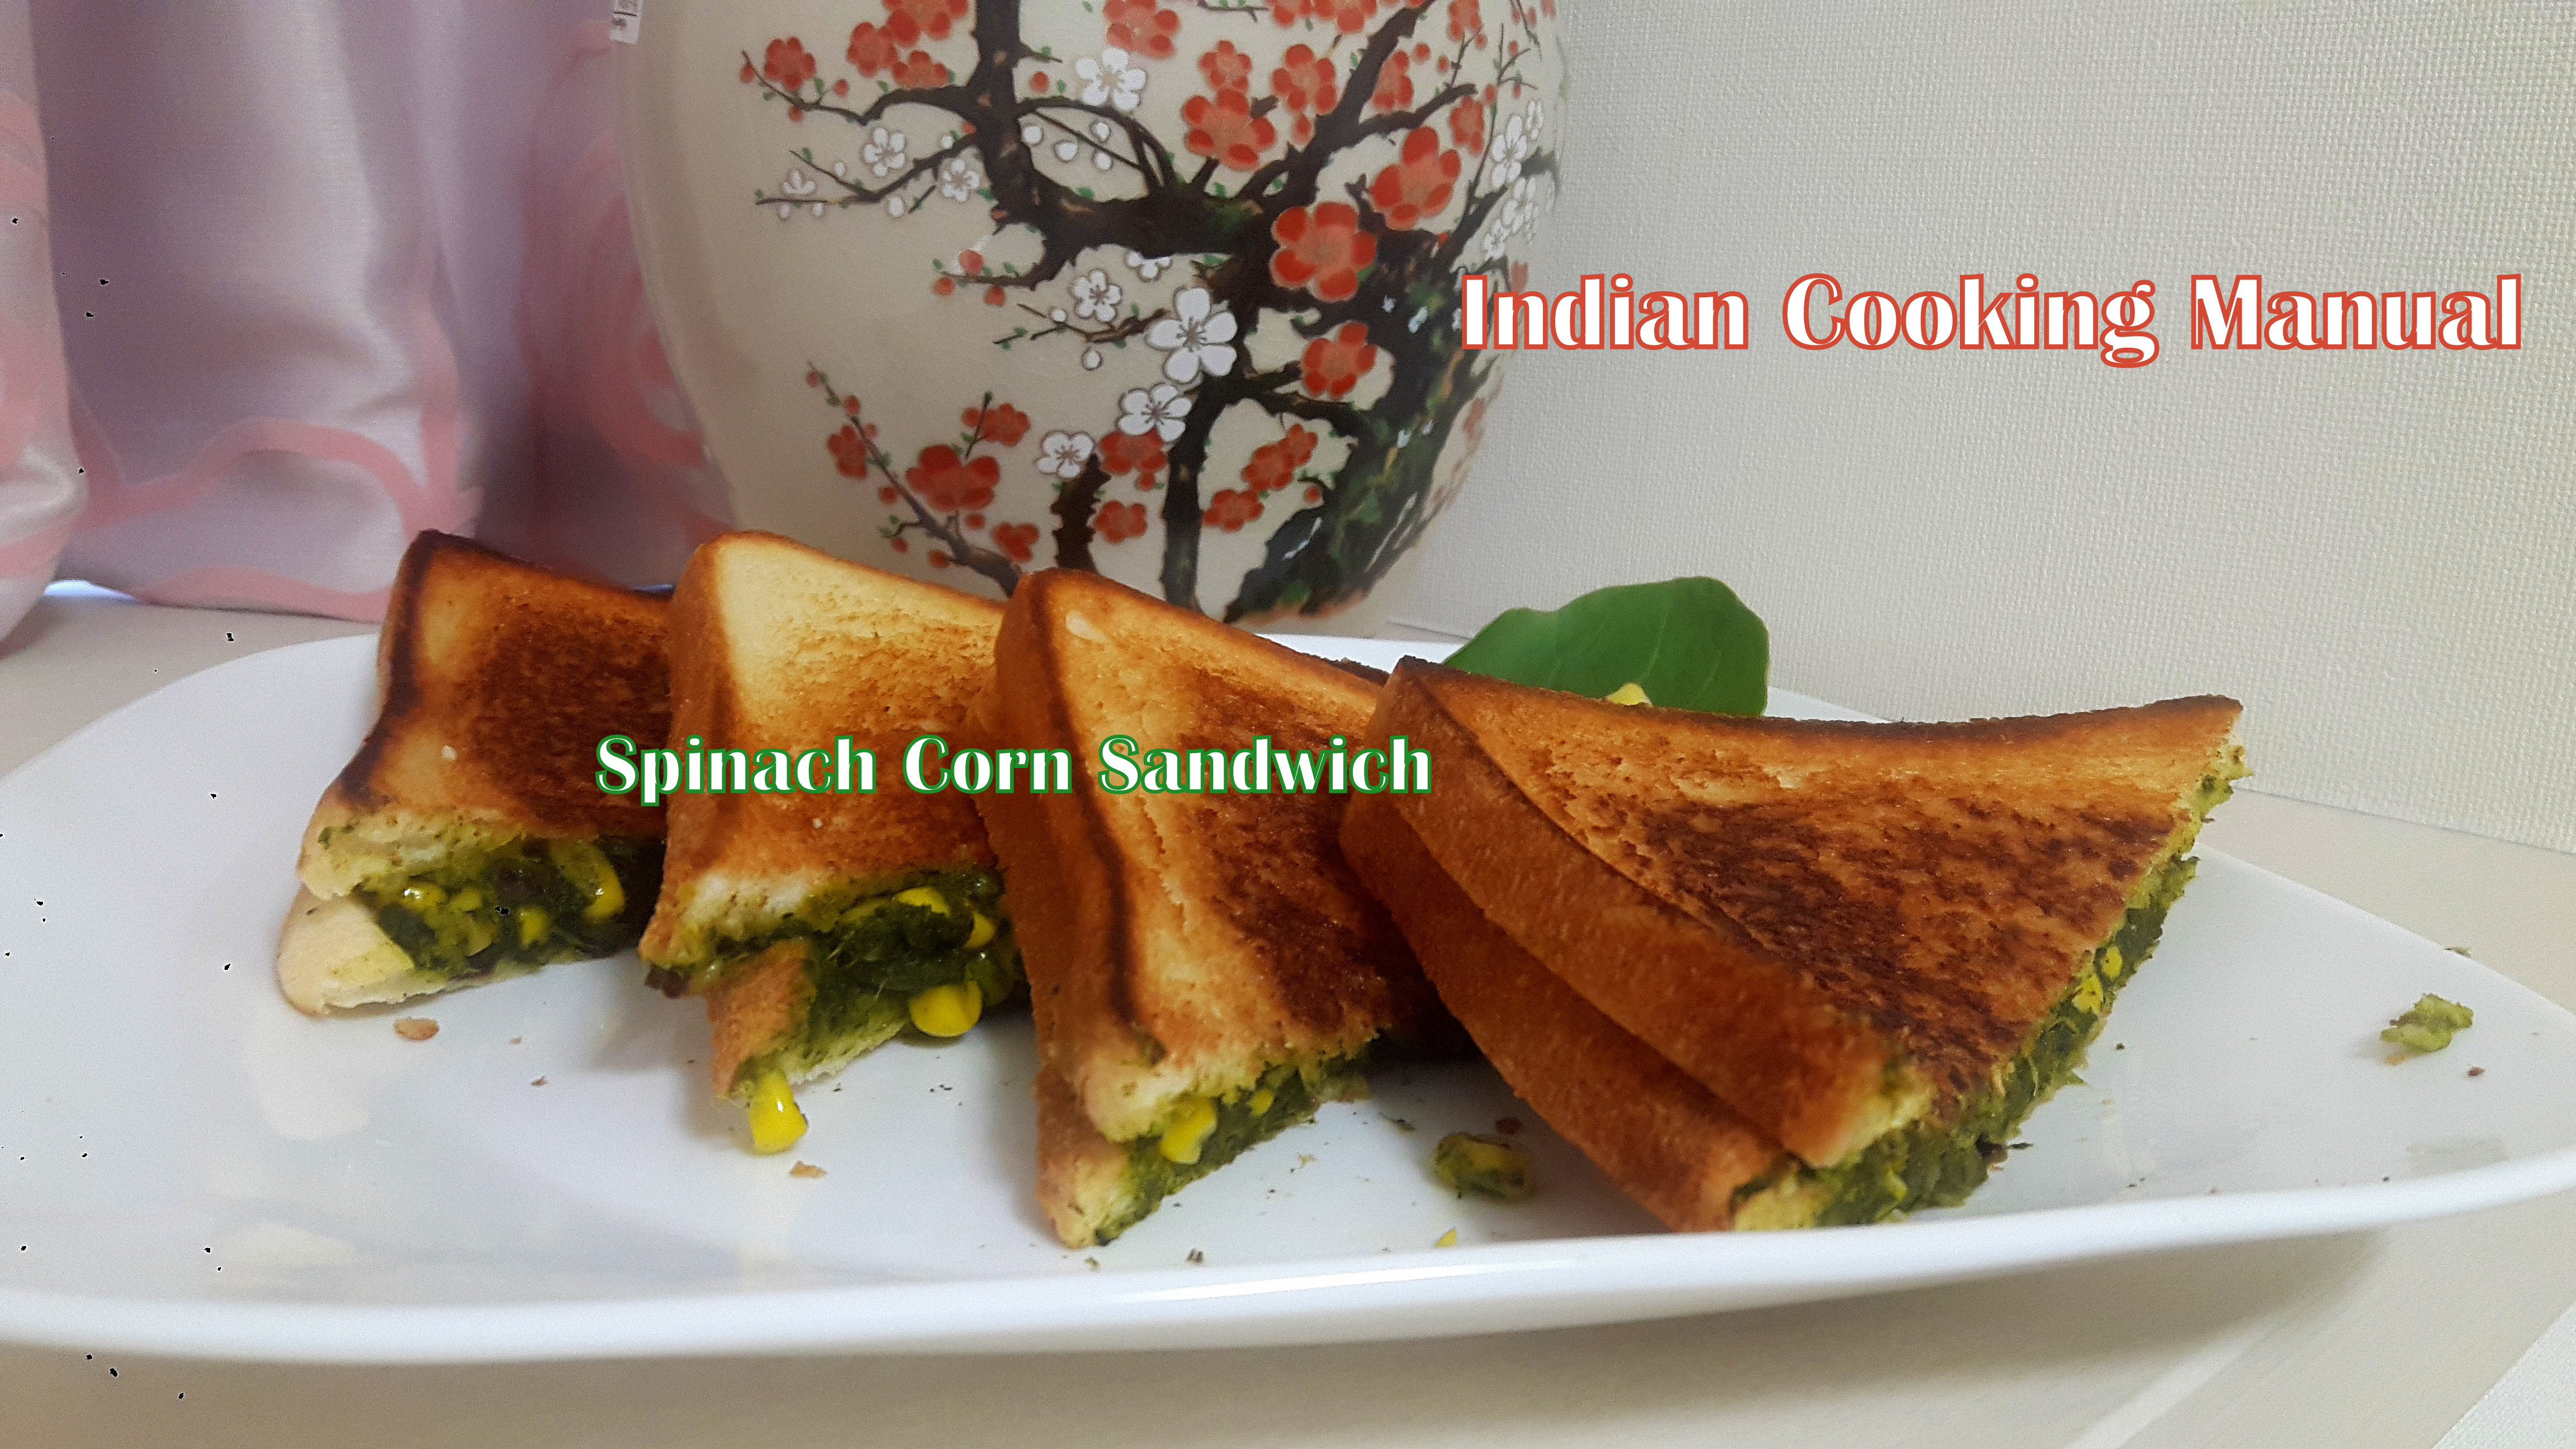 Spinach Corn Sandwich